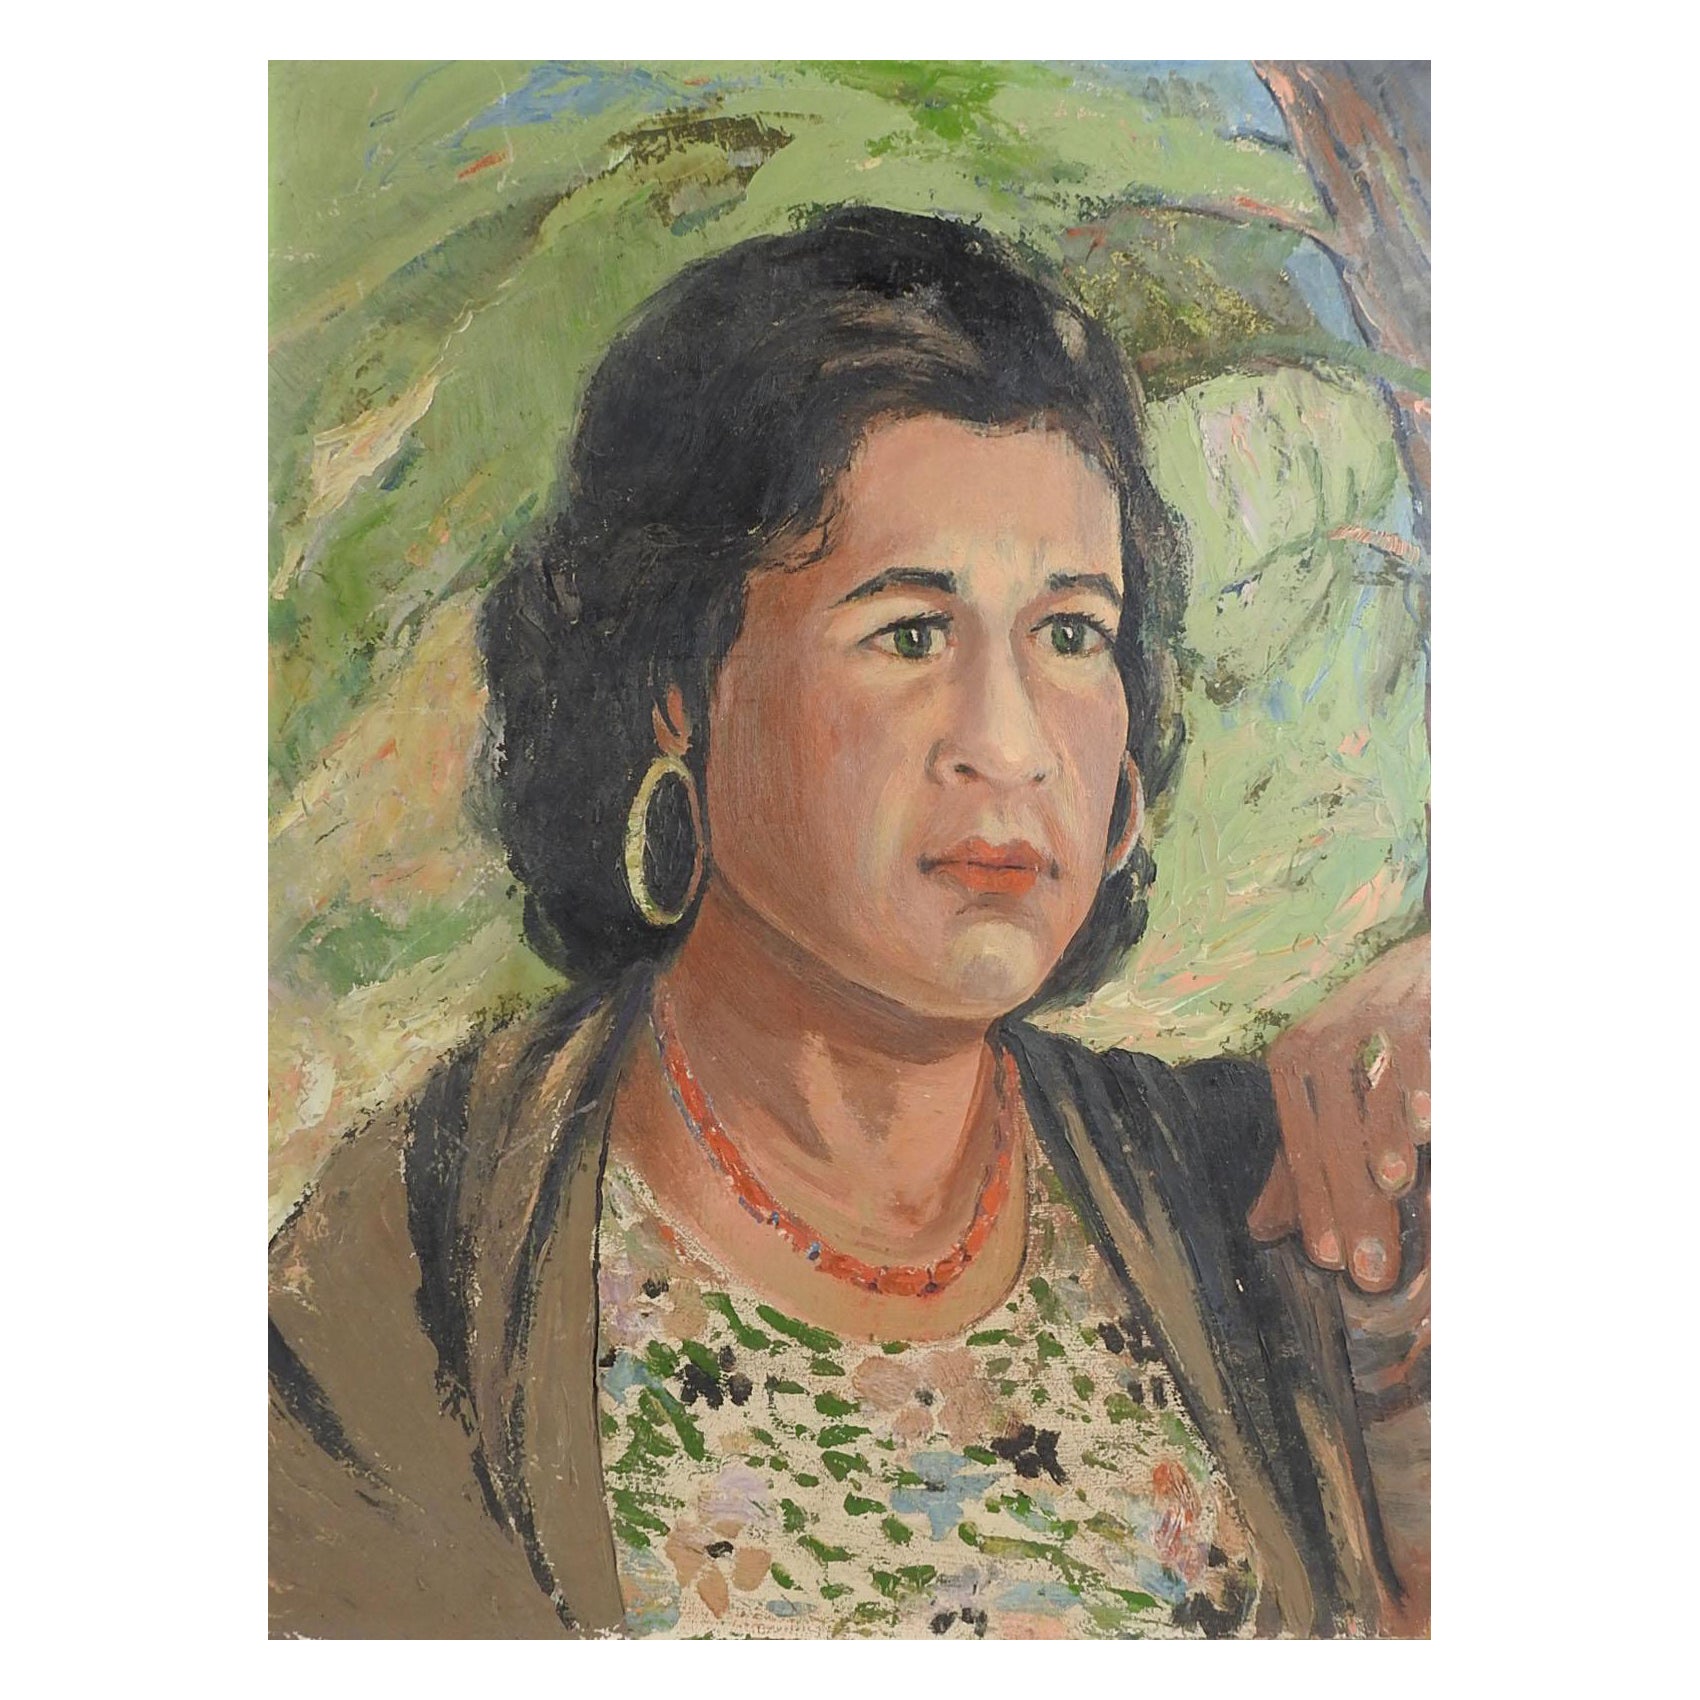 Porträtgemälde einer Frau, ca. 1960er Jahre